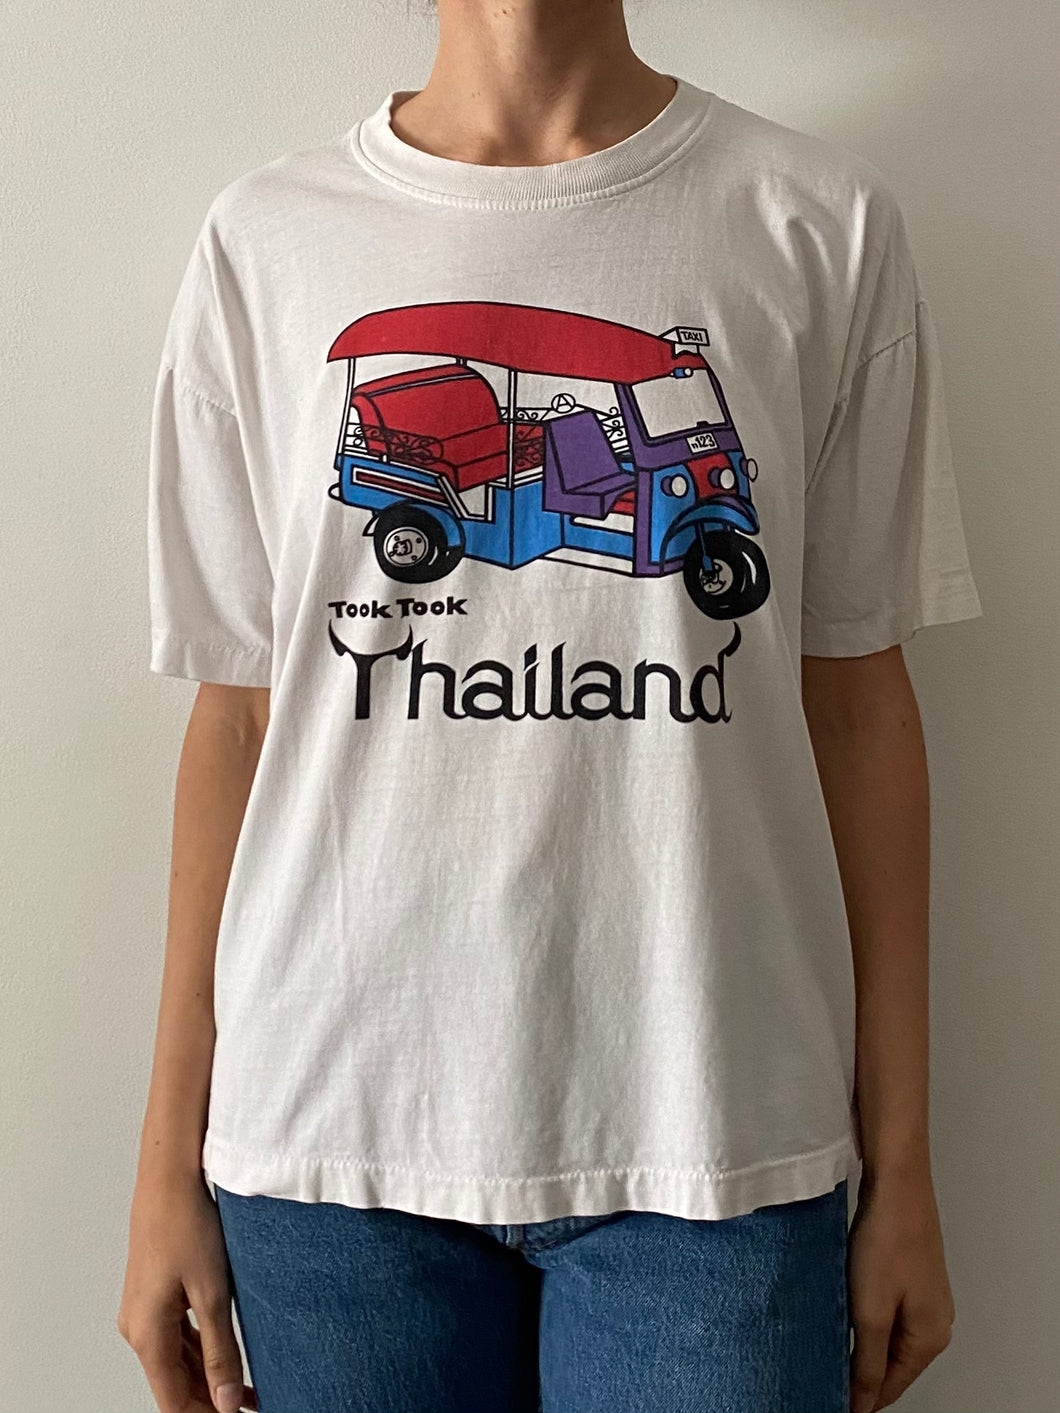 80s/90s Took Took Thailand tee